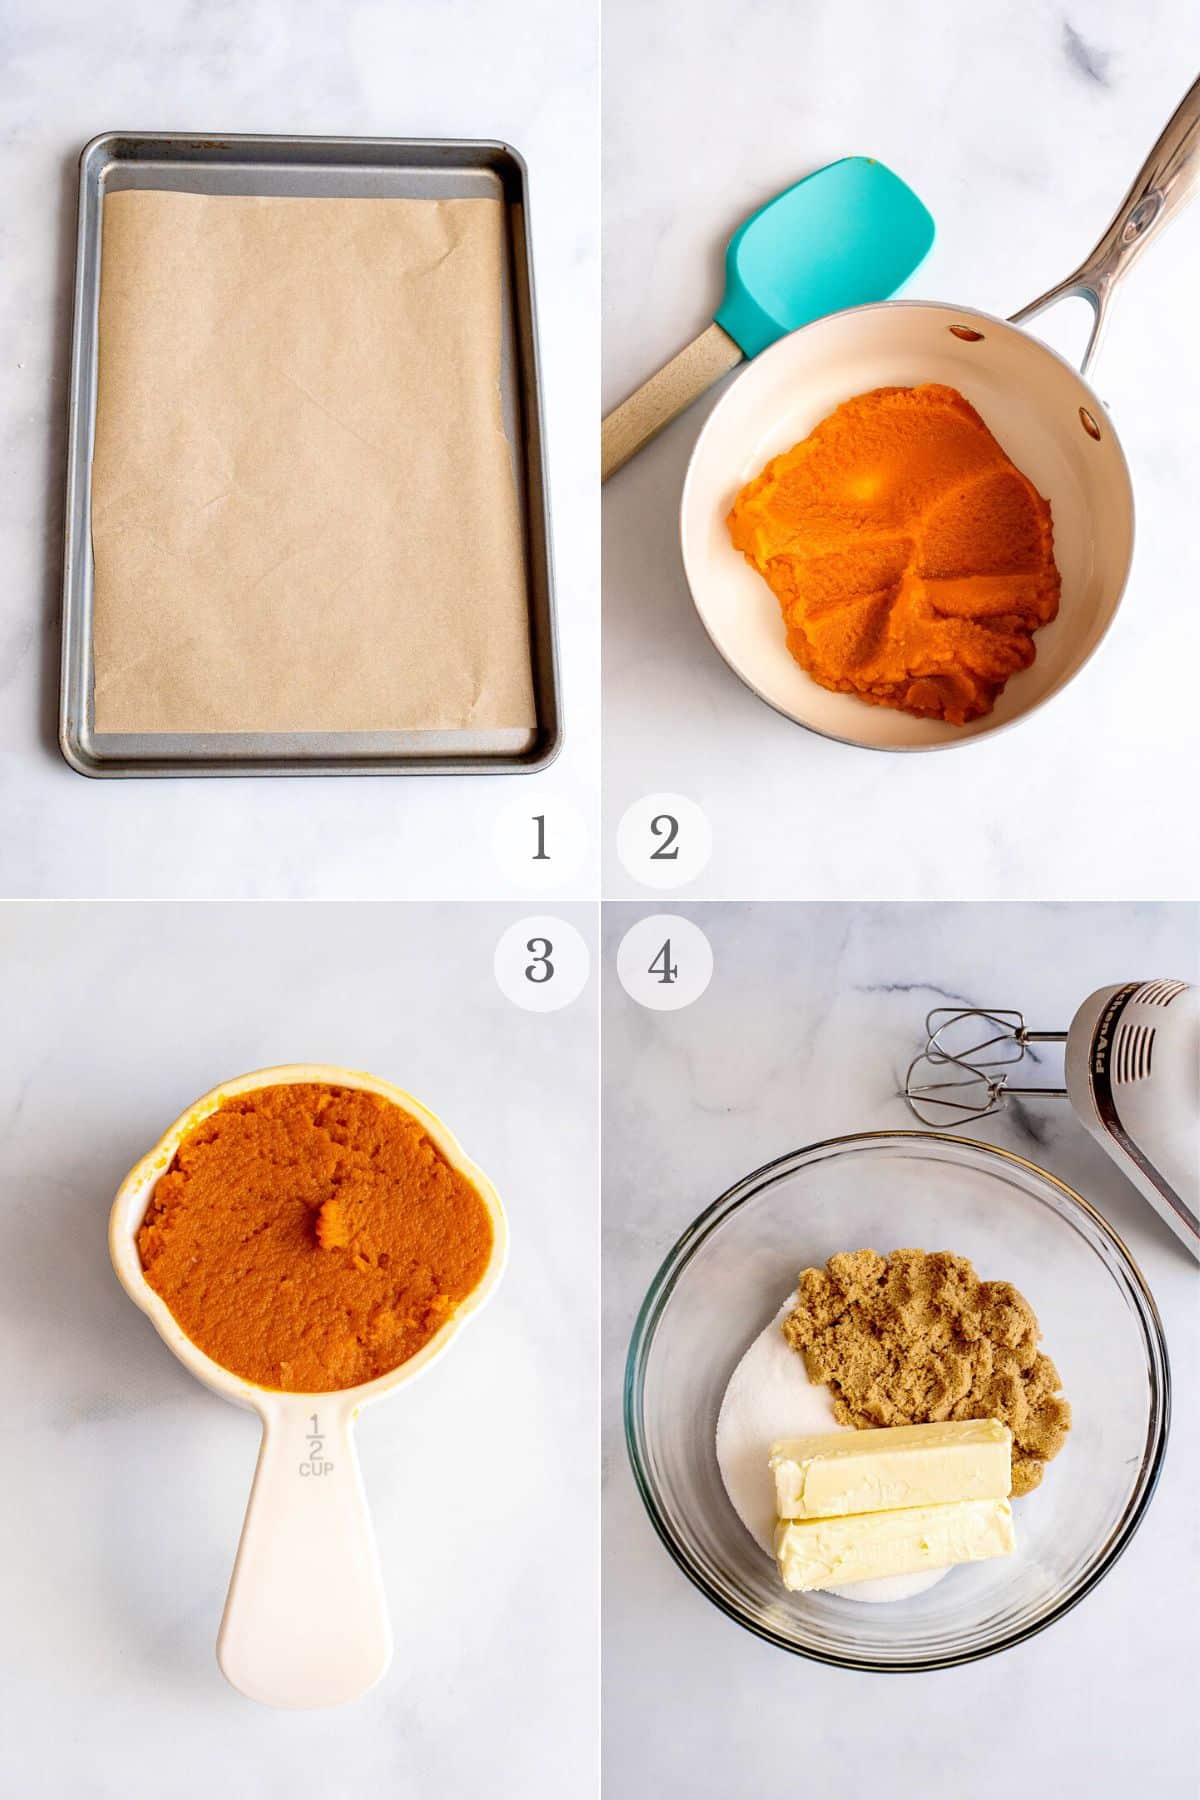 pumpkin chocolate chip cookies recipe steps 1-4.